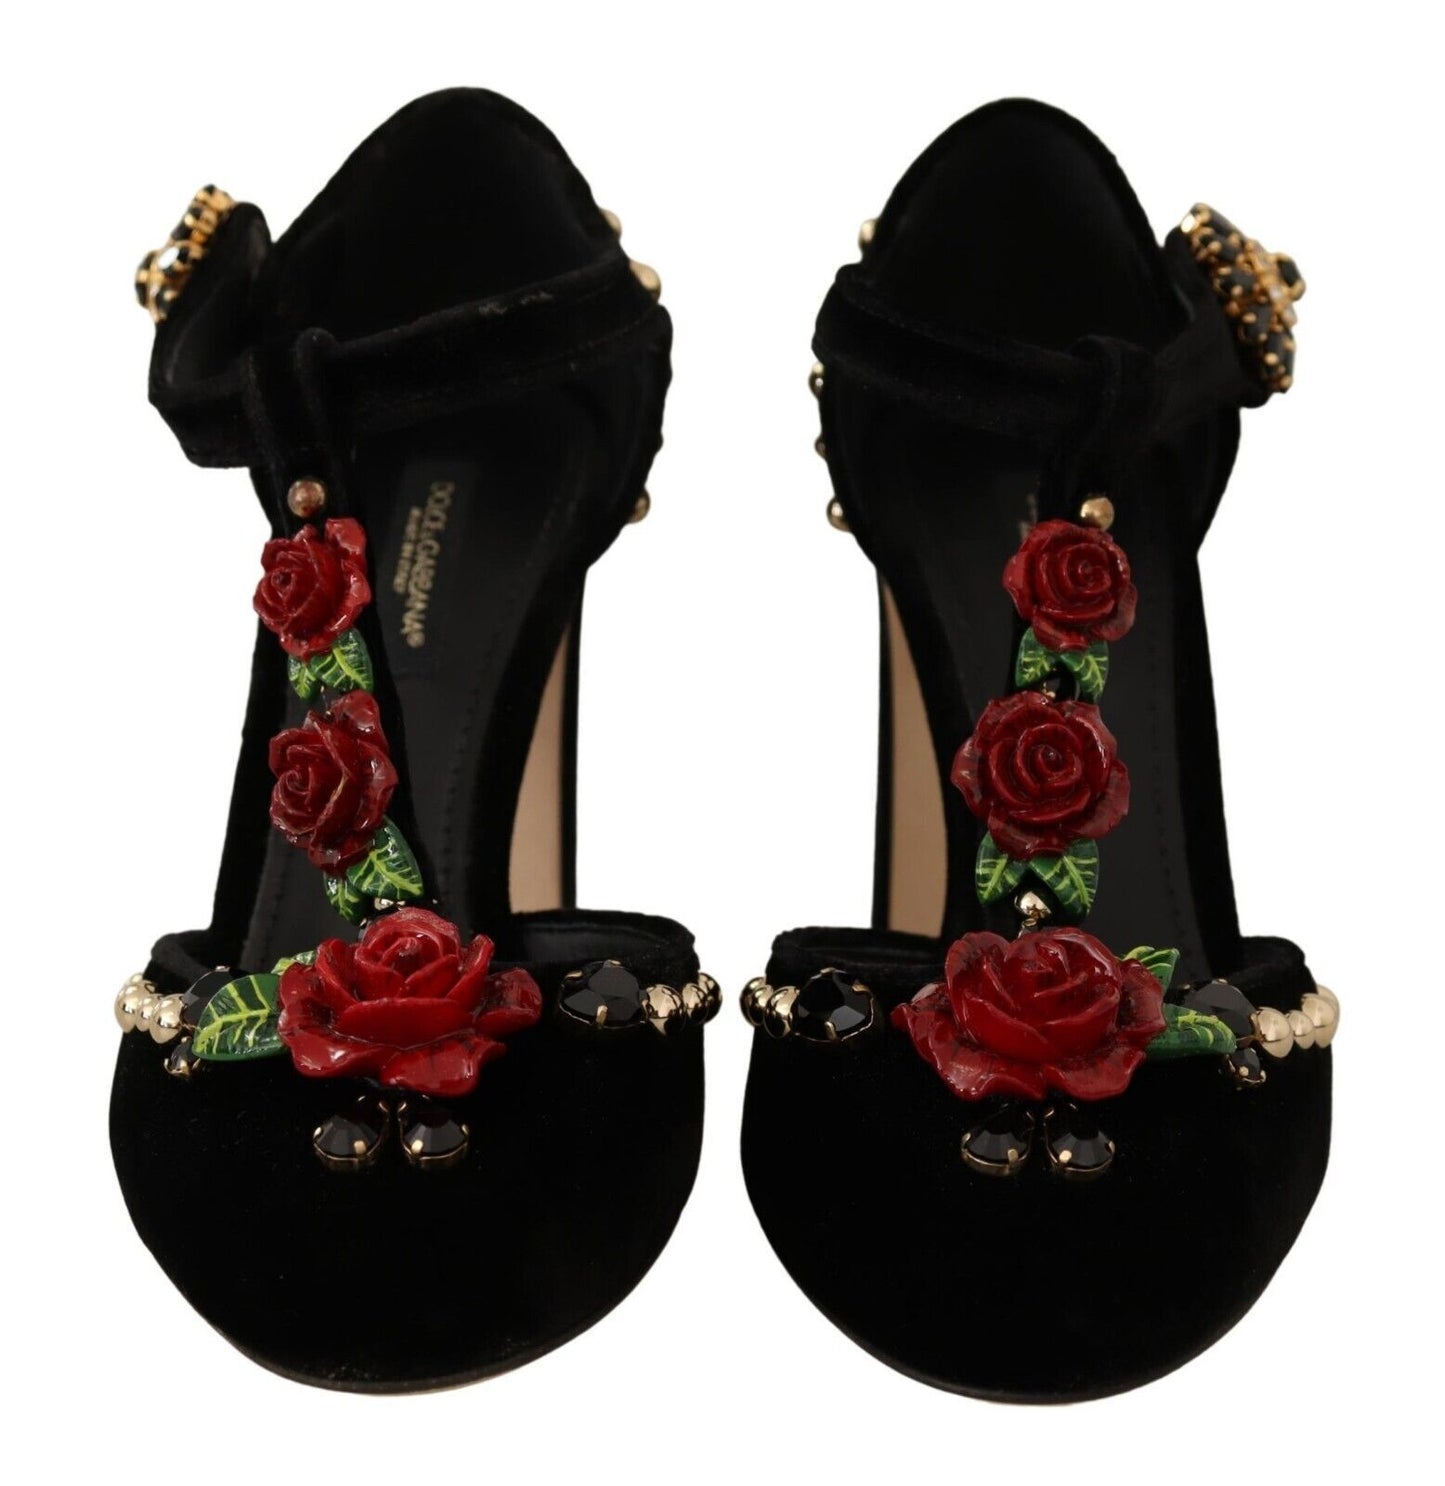 Dolce & Gabbana Black Mary Jane Pumpen Rosen Kristalle Schuhe